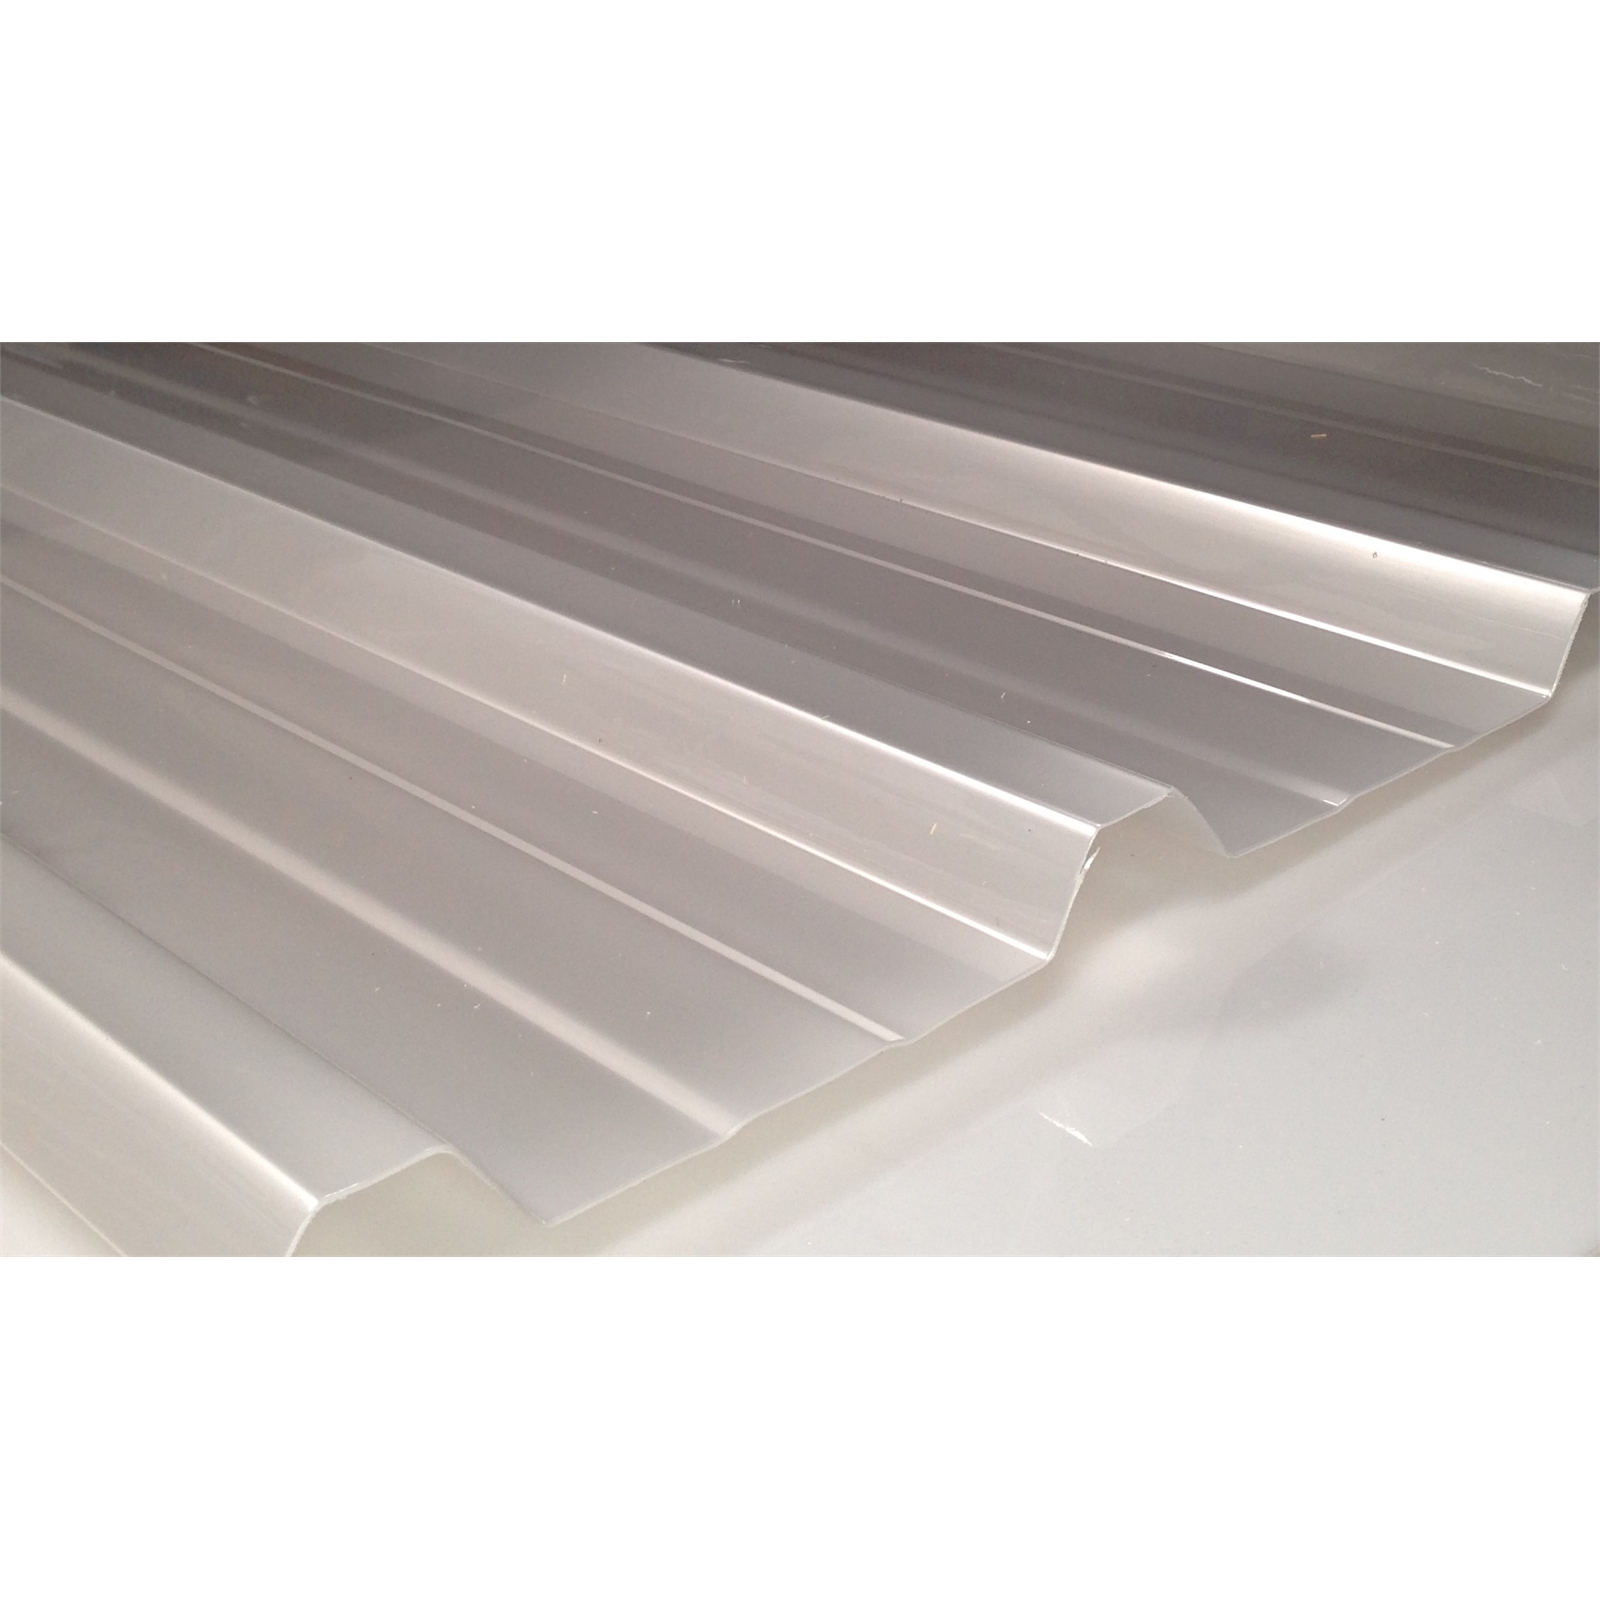 Suntuf Trimdek 1.0 x 1.8m Metallic Ice Polycarbonate Roofing